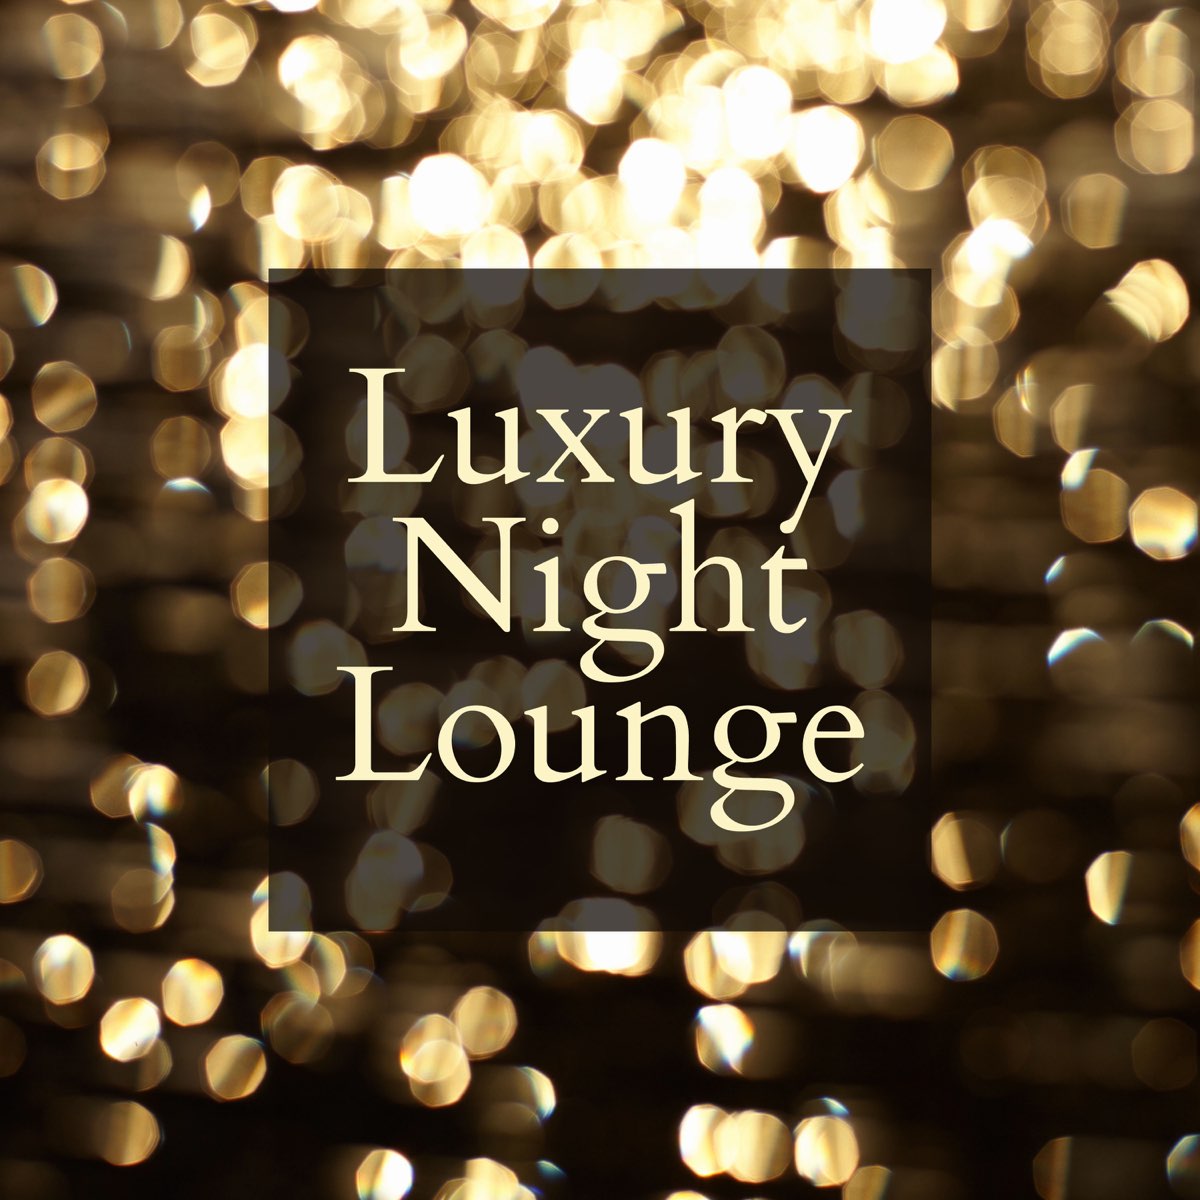 Luxury night. Luxury Night records. Ancient Europe Luxury Night Party Table.